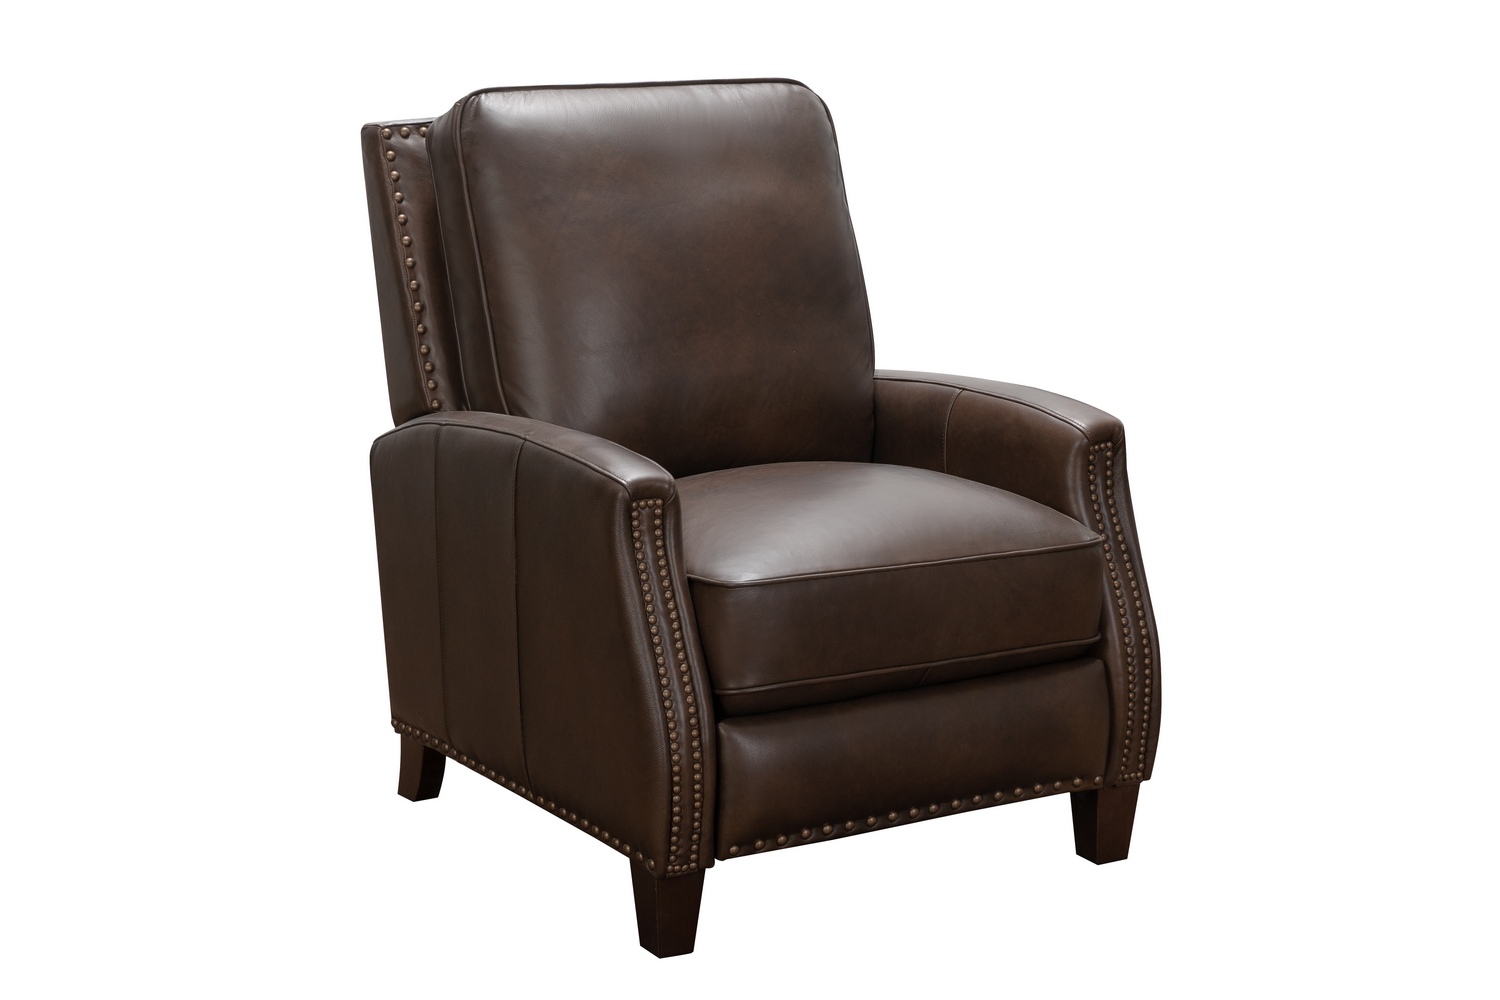 Barcalounger Melrose Recliner Chair - Ashford Walnut/All Leather